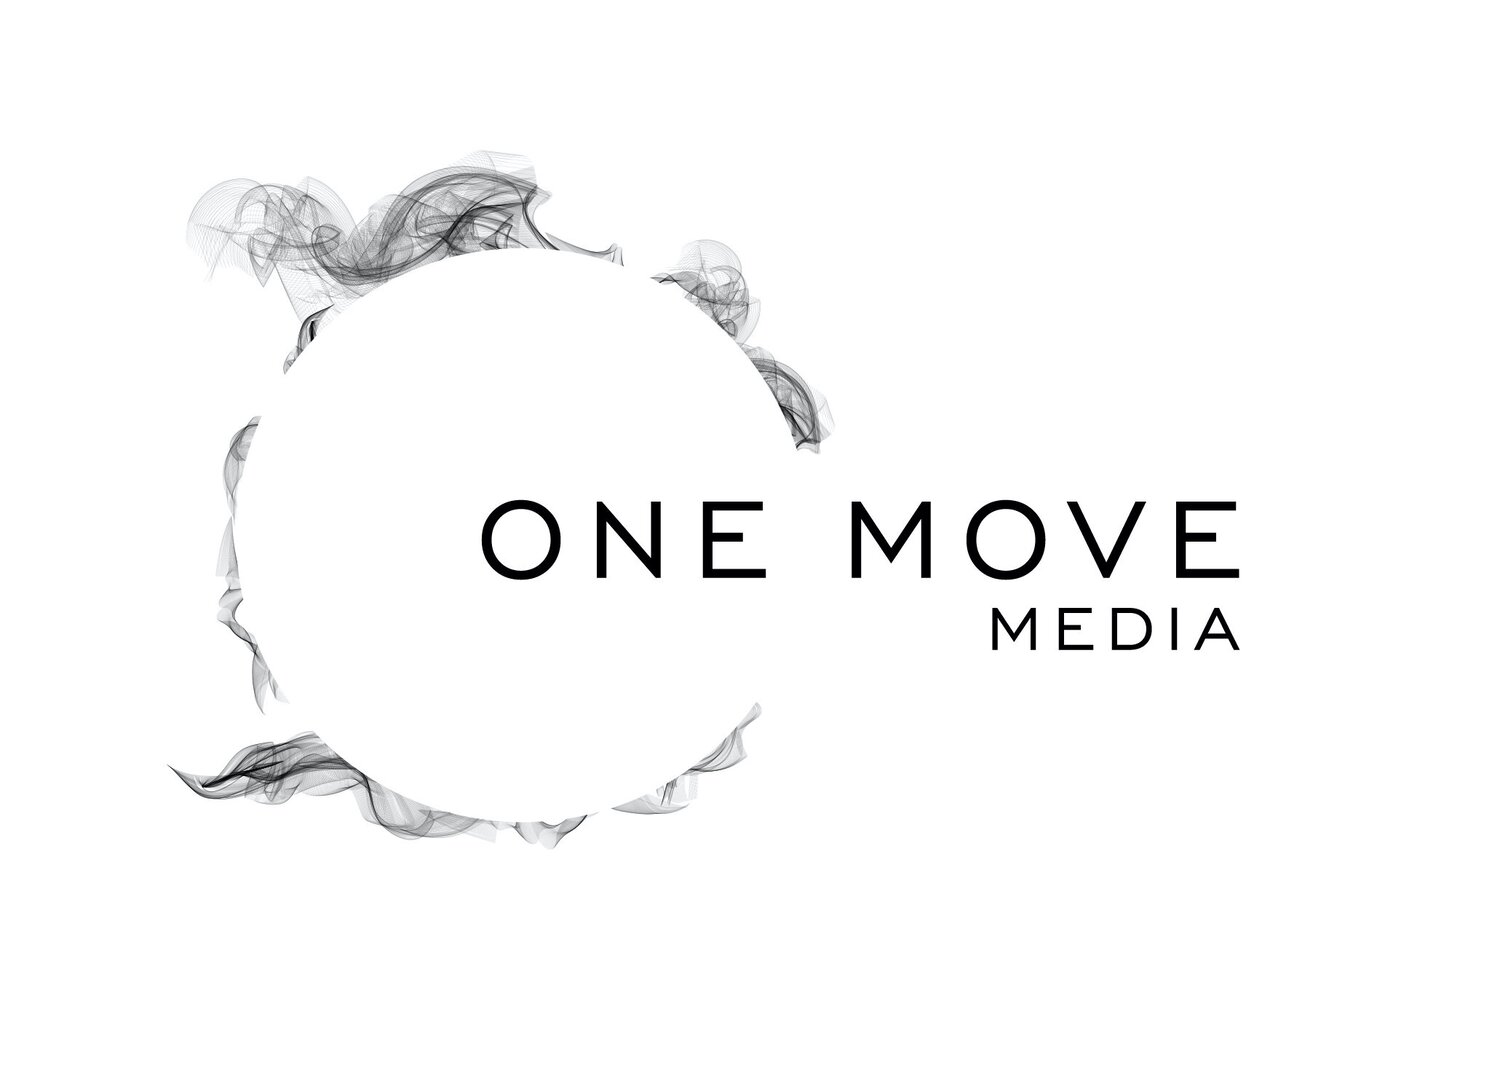 ONE MOVE MEDIA